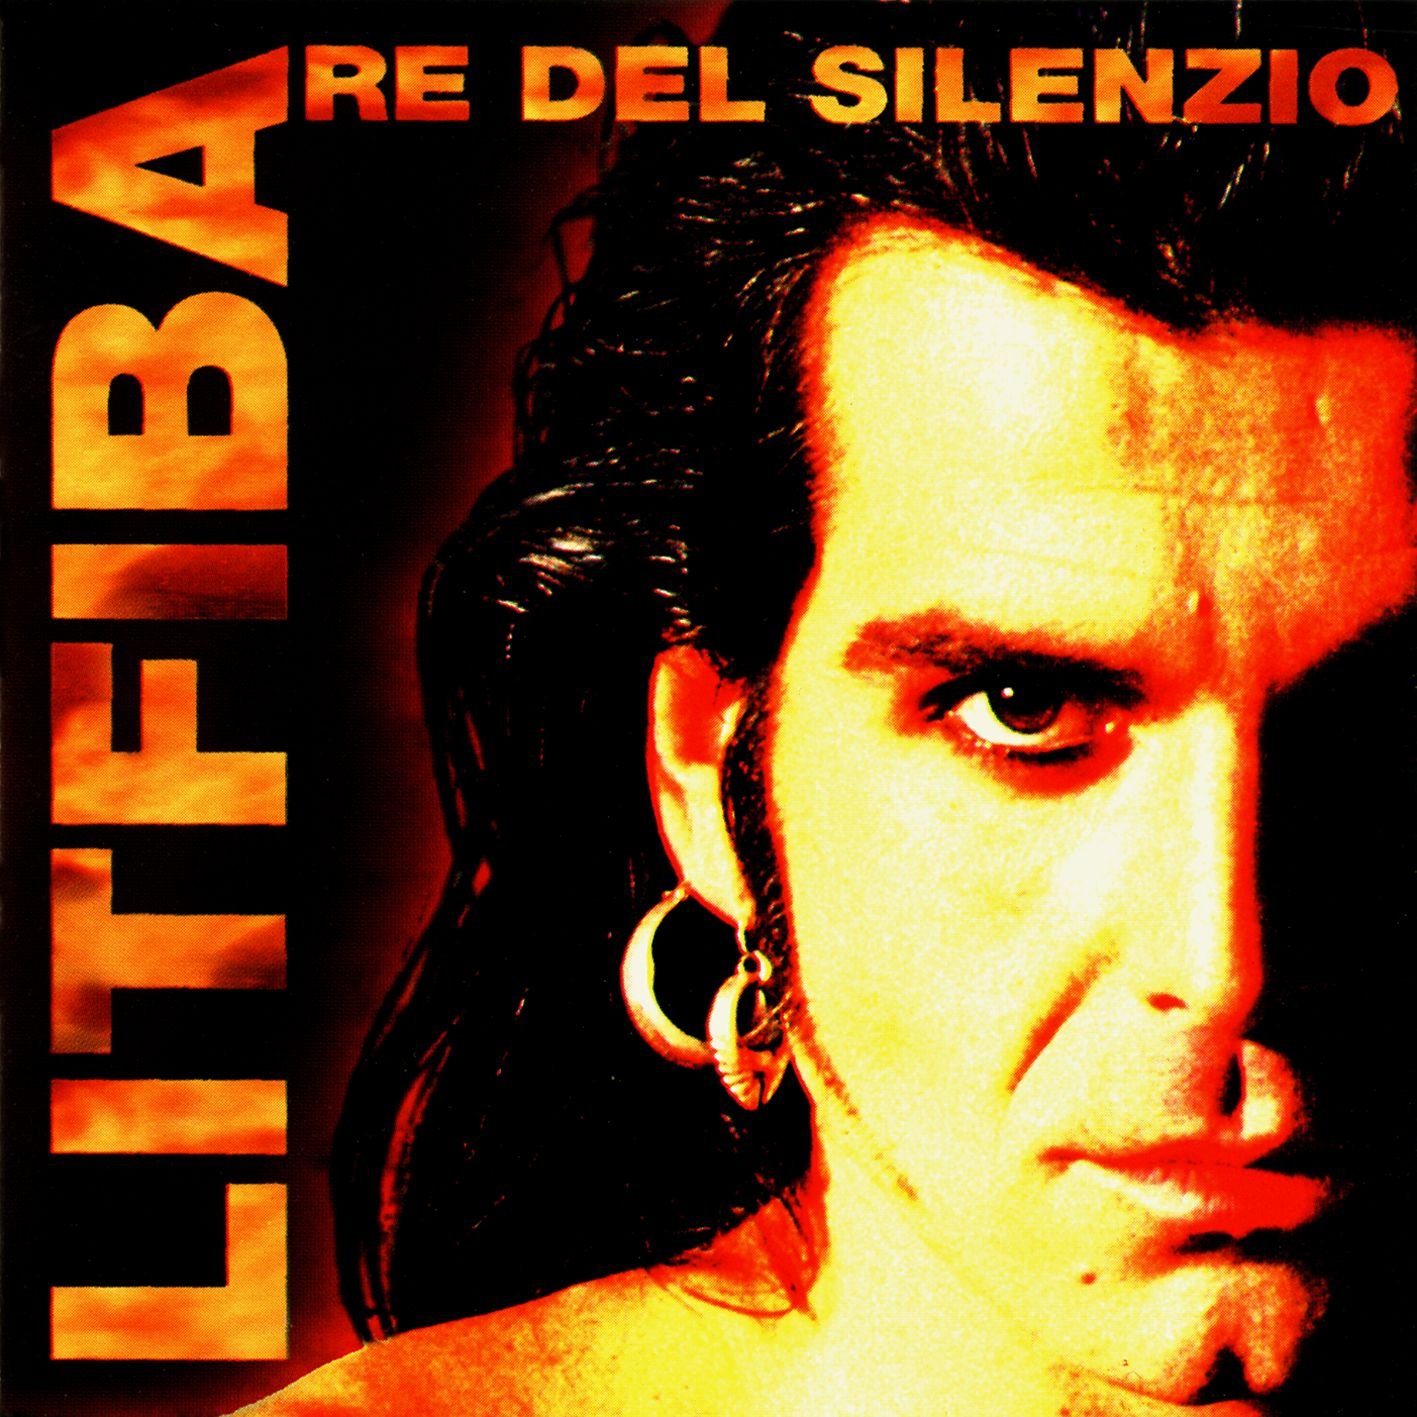 Re del silenzio - Litfiba - Litfibaunofficial.it